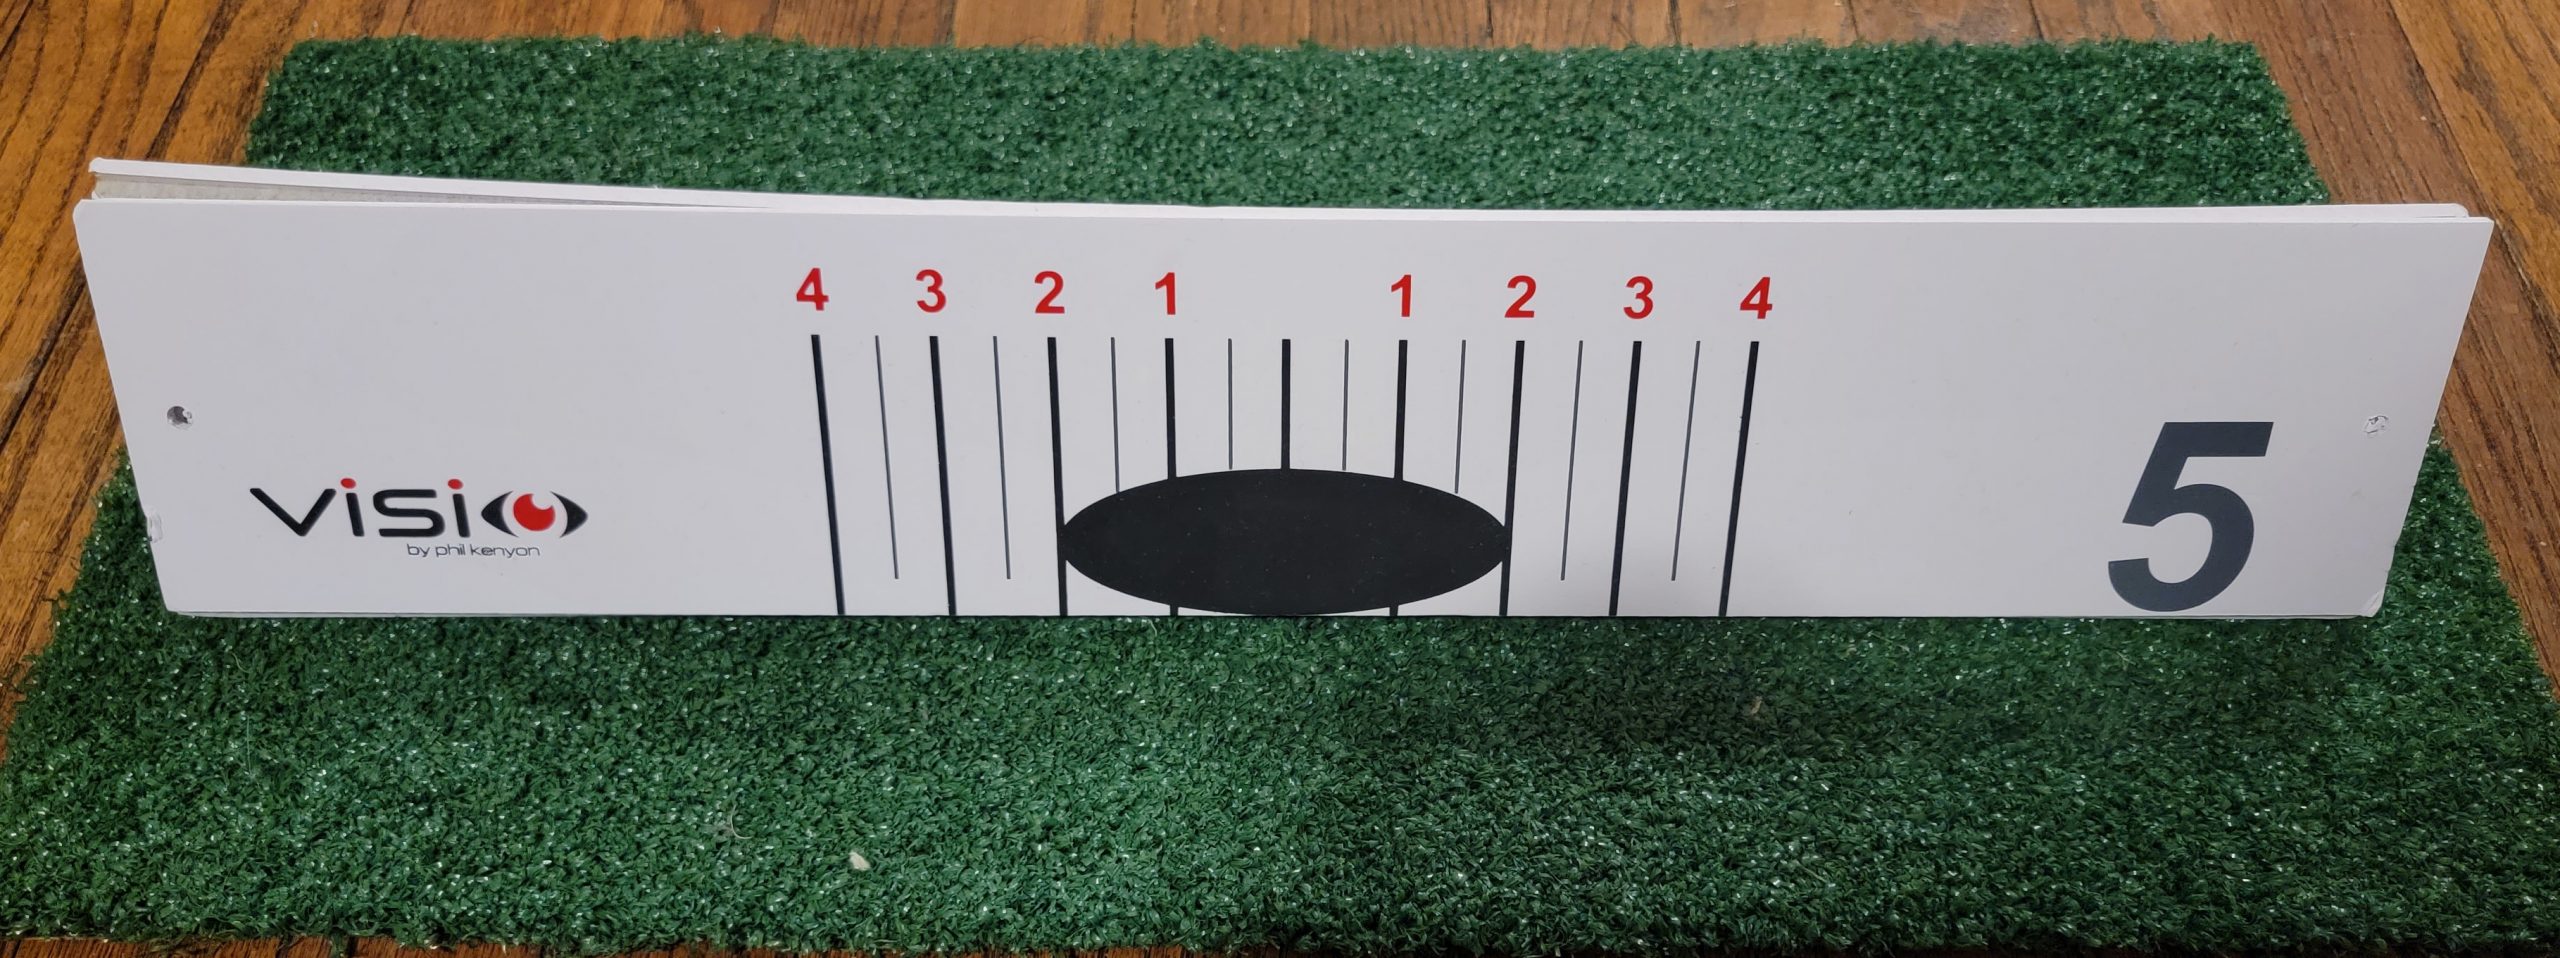 Old Duffer Golf image of Visio Aim Board